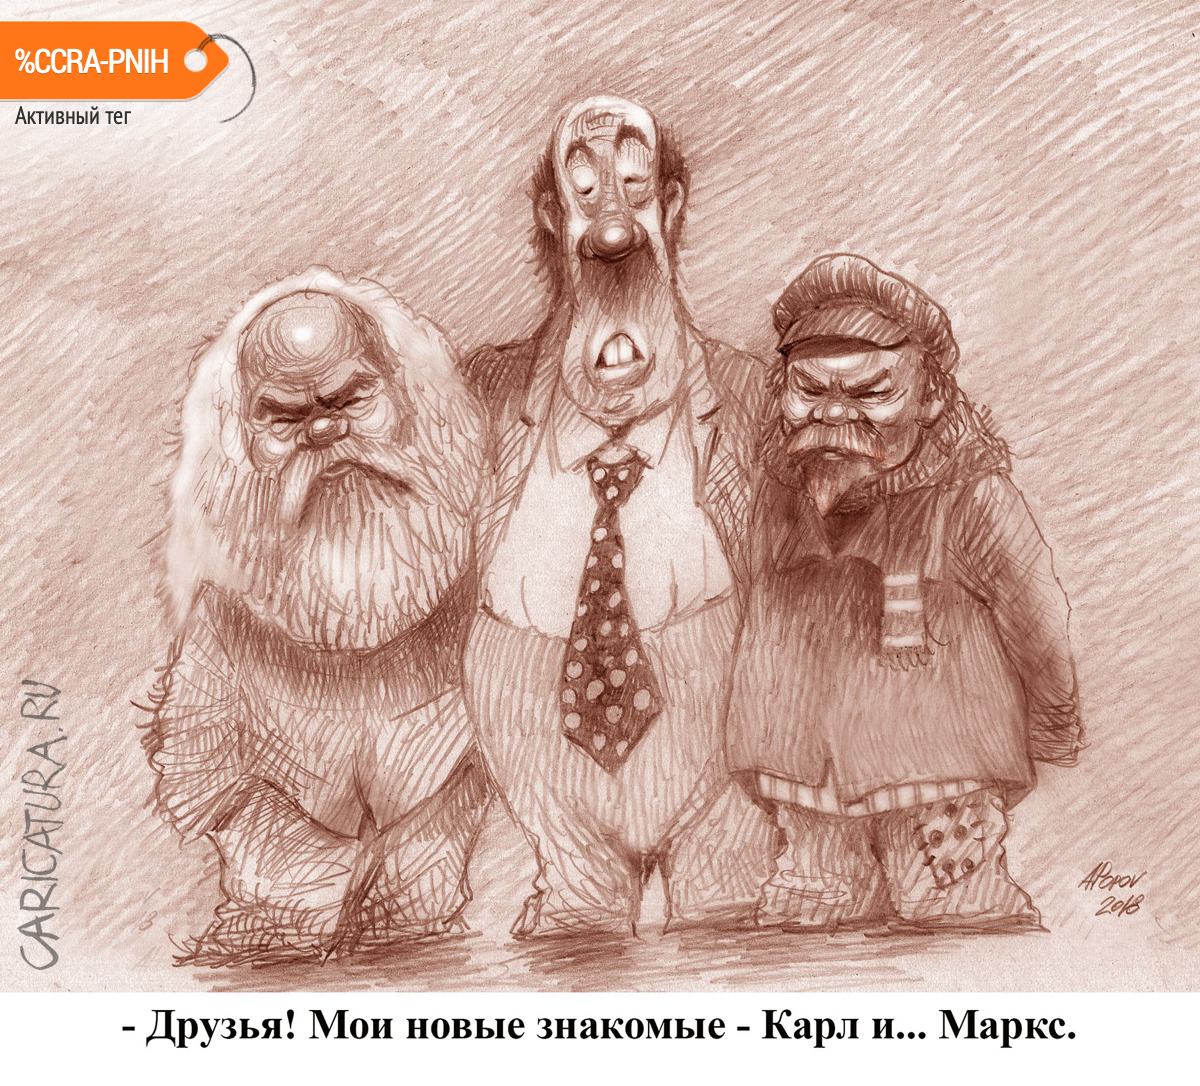 Карикатура "Прекрасен наш союз!", Александр Попов